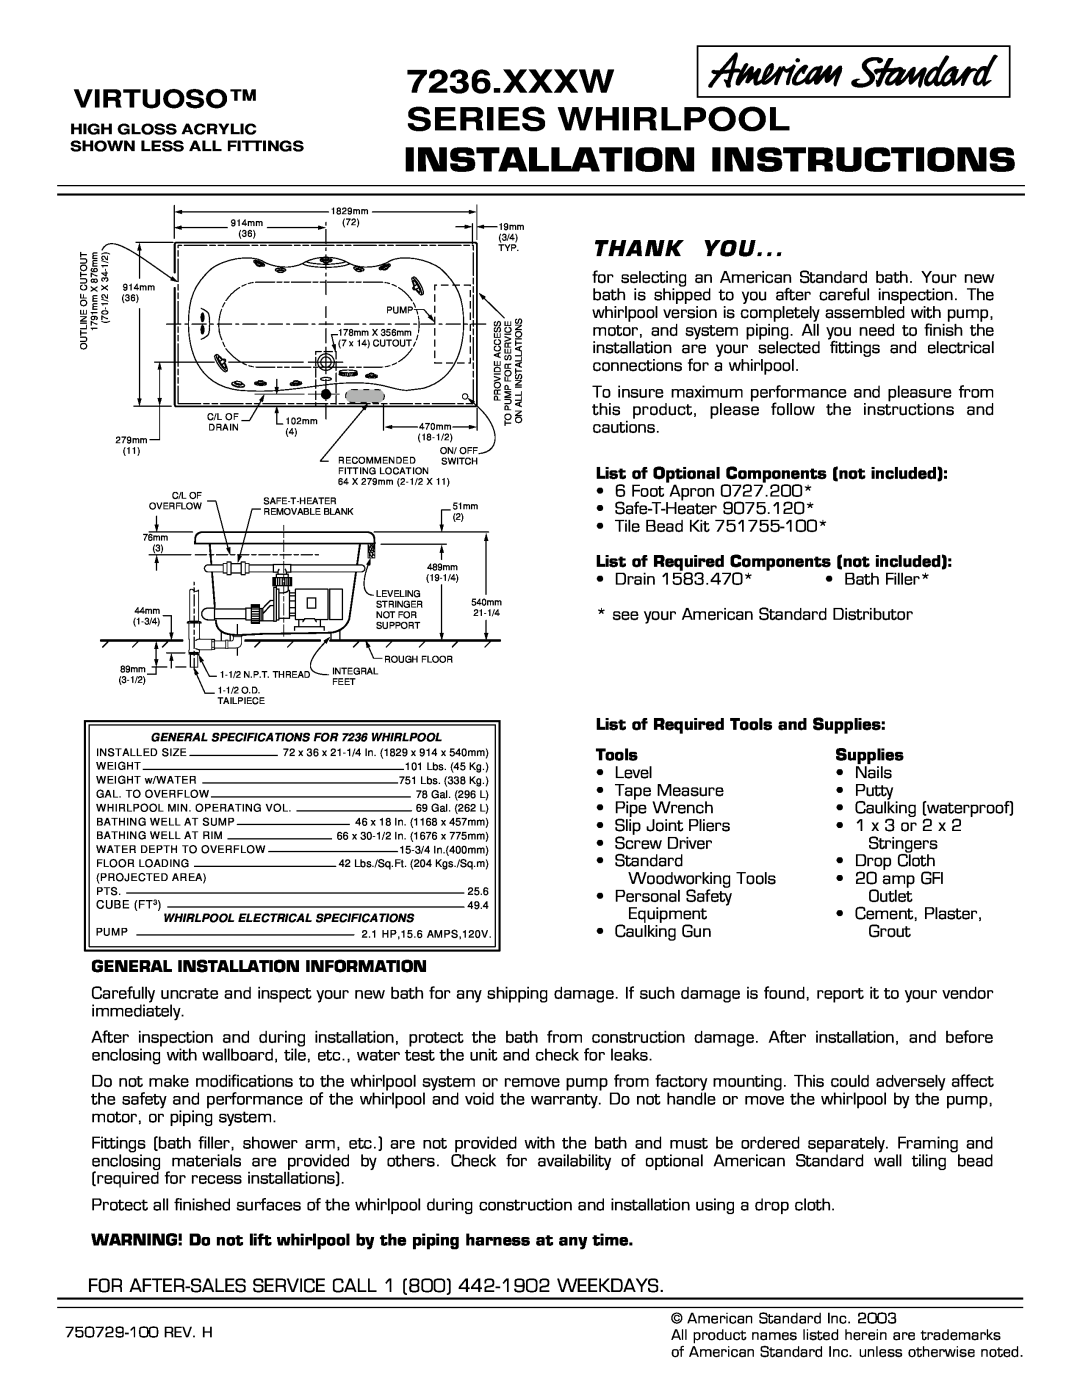 American Standard 7236.XXXW installation instructions Xxxw Series Whirlpool, Installation Instructions, Virtuoso, Tools 